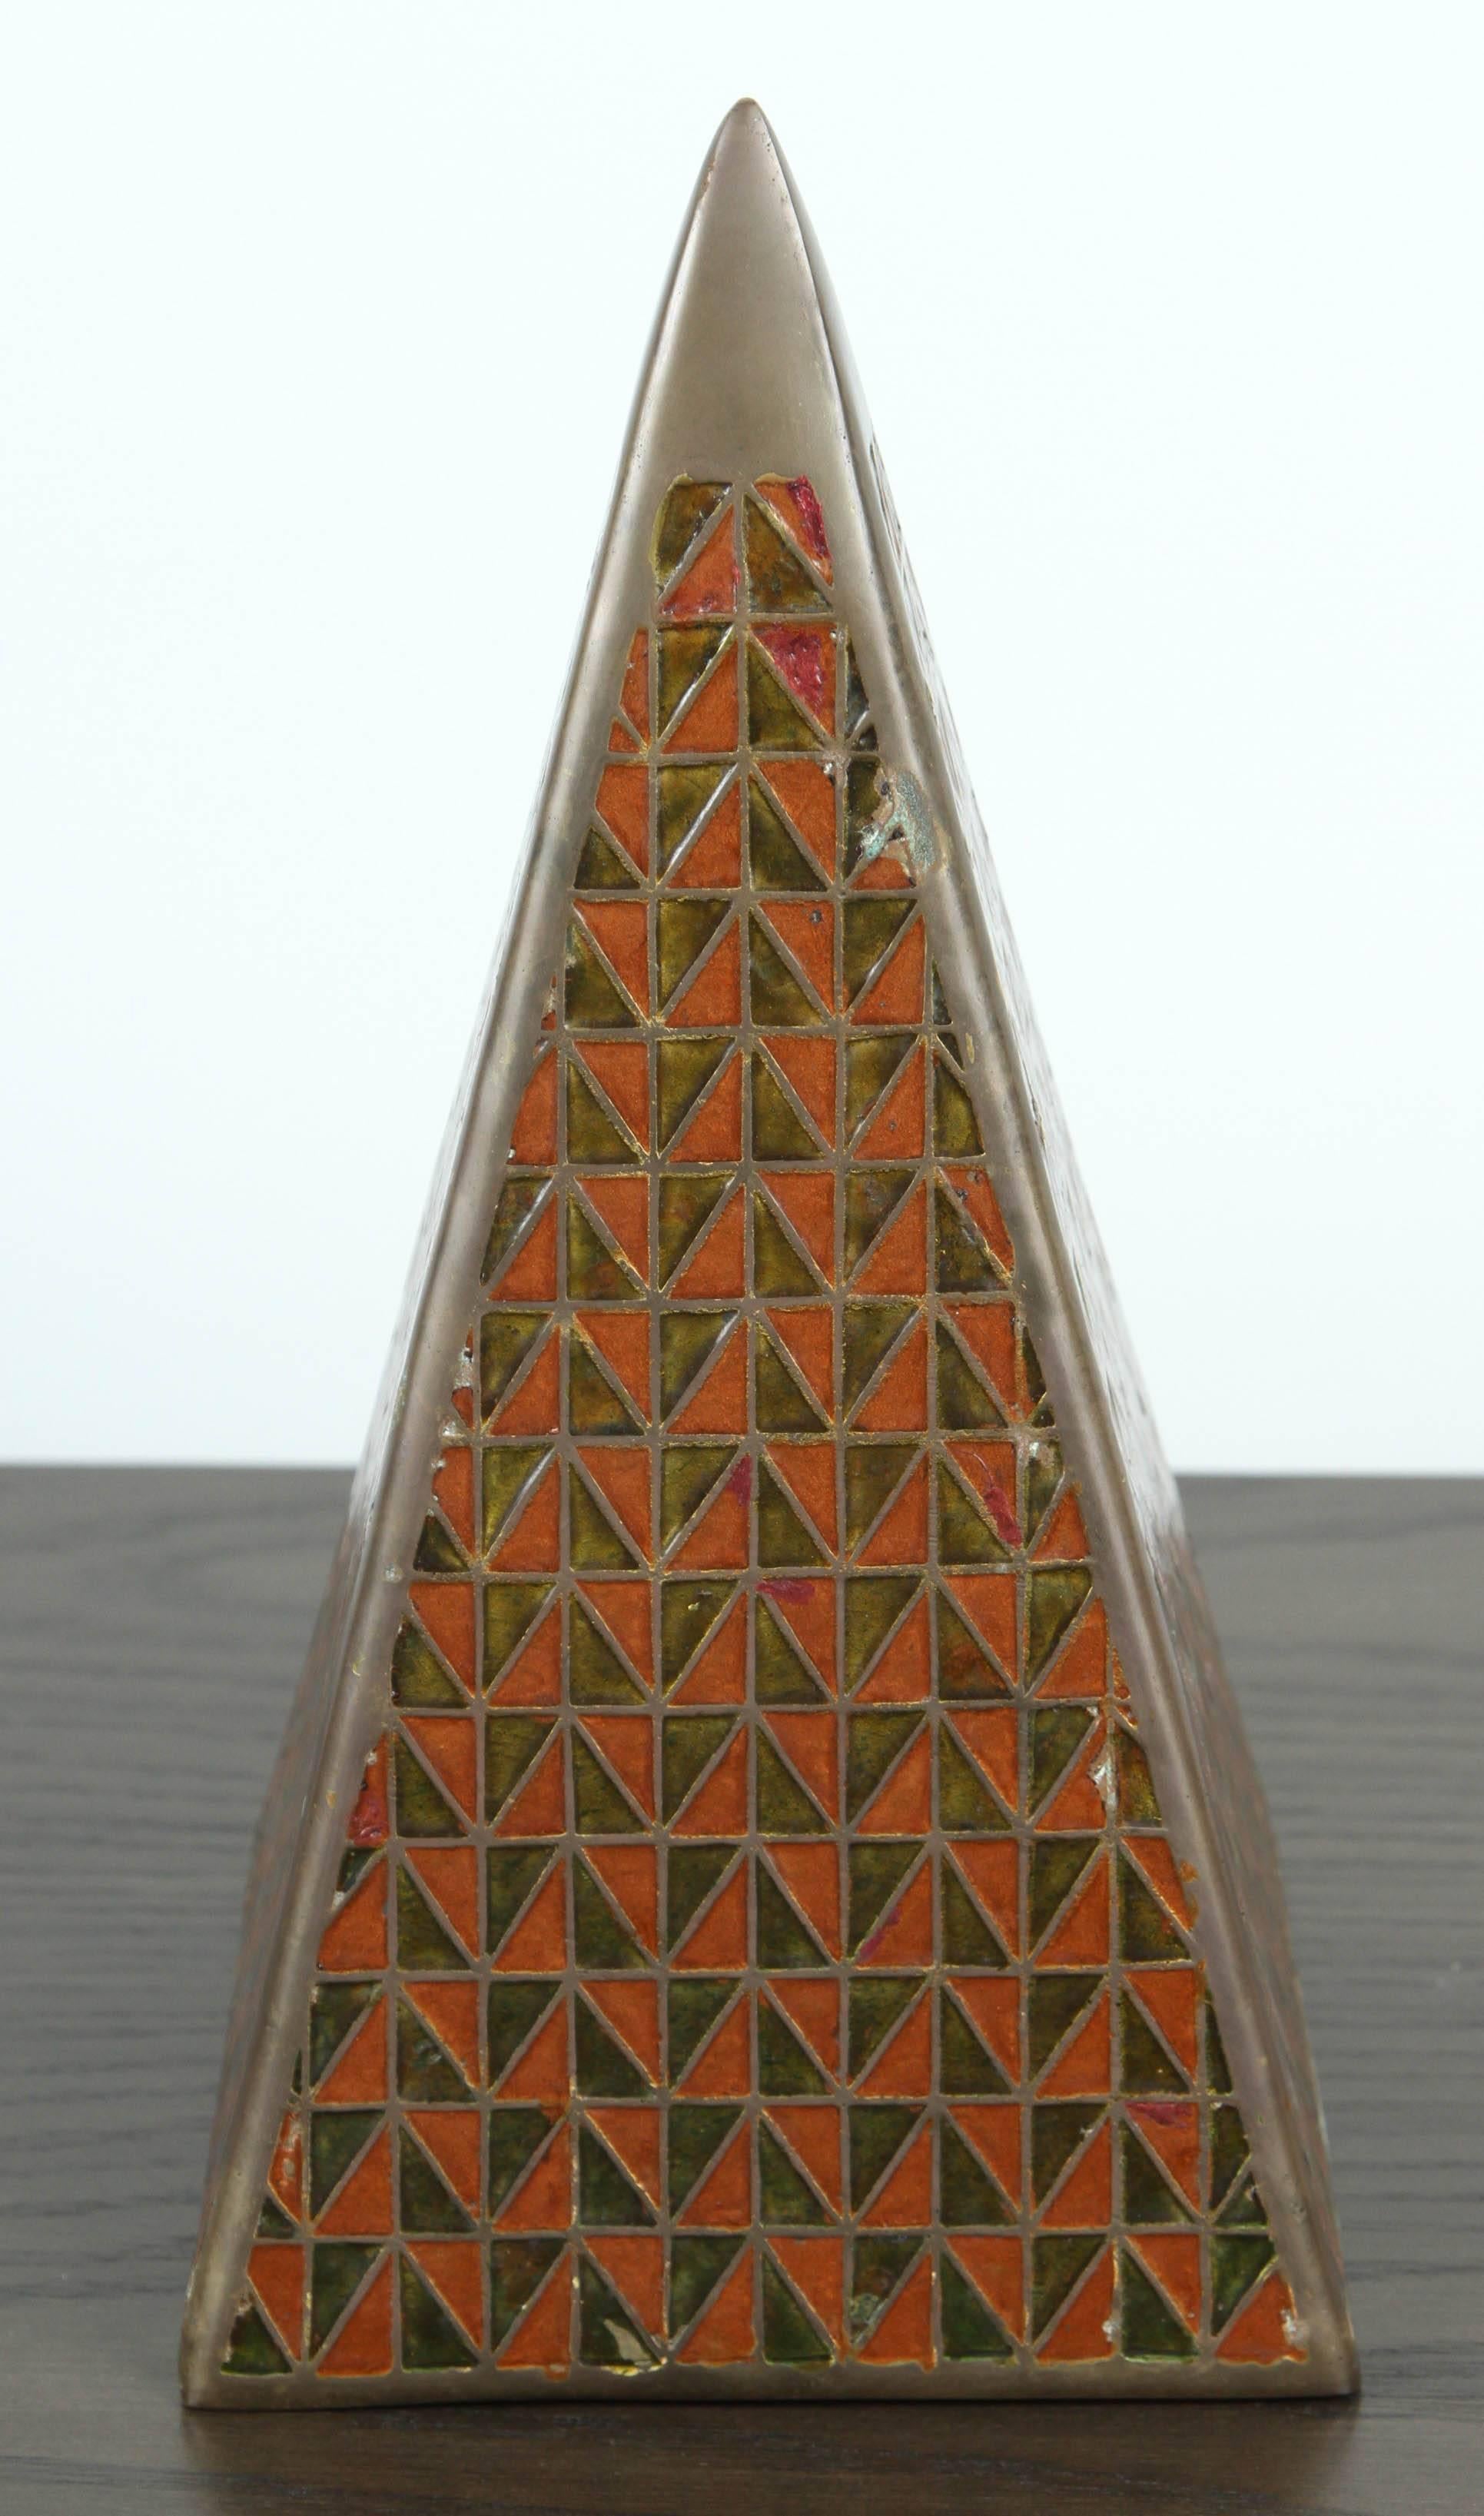 Enameled pyramid by Raymor.